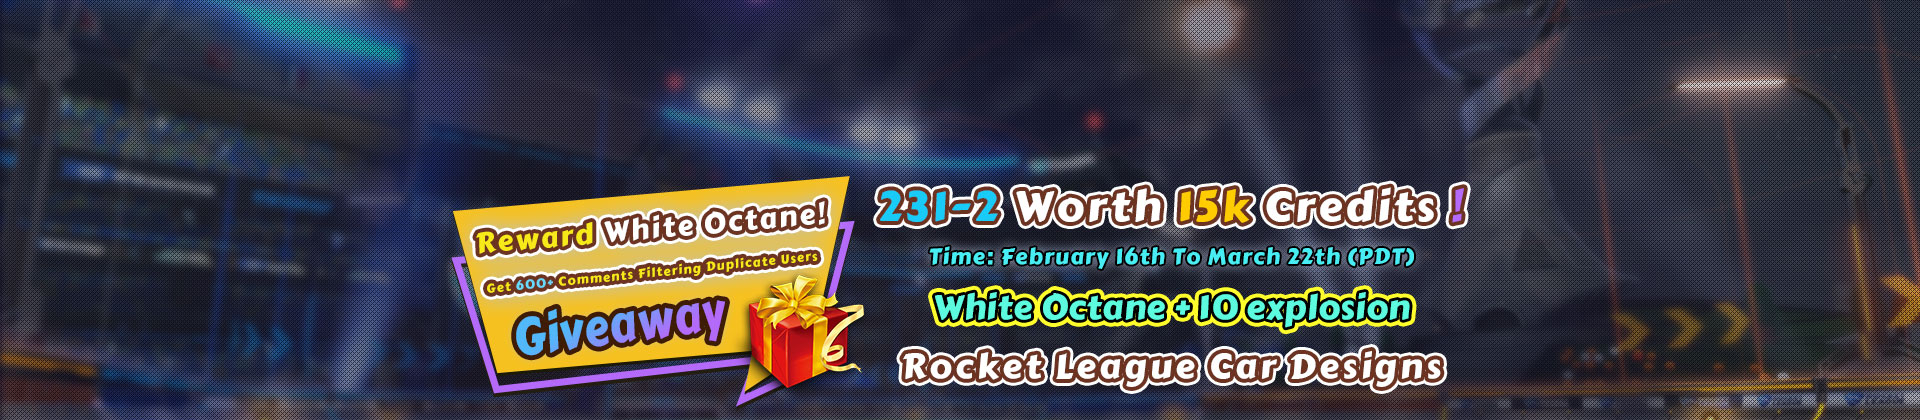 Rocket League Items Giveaway 231-2